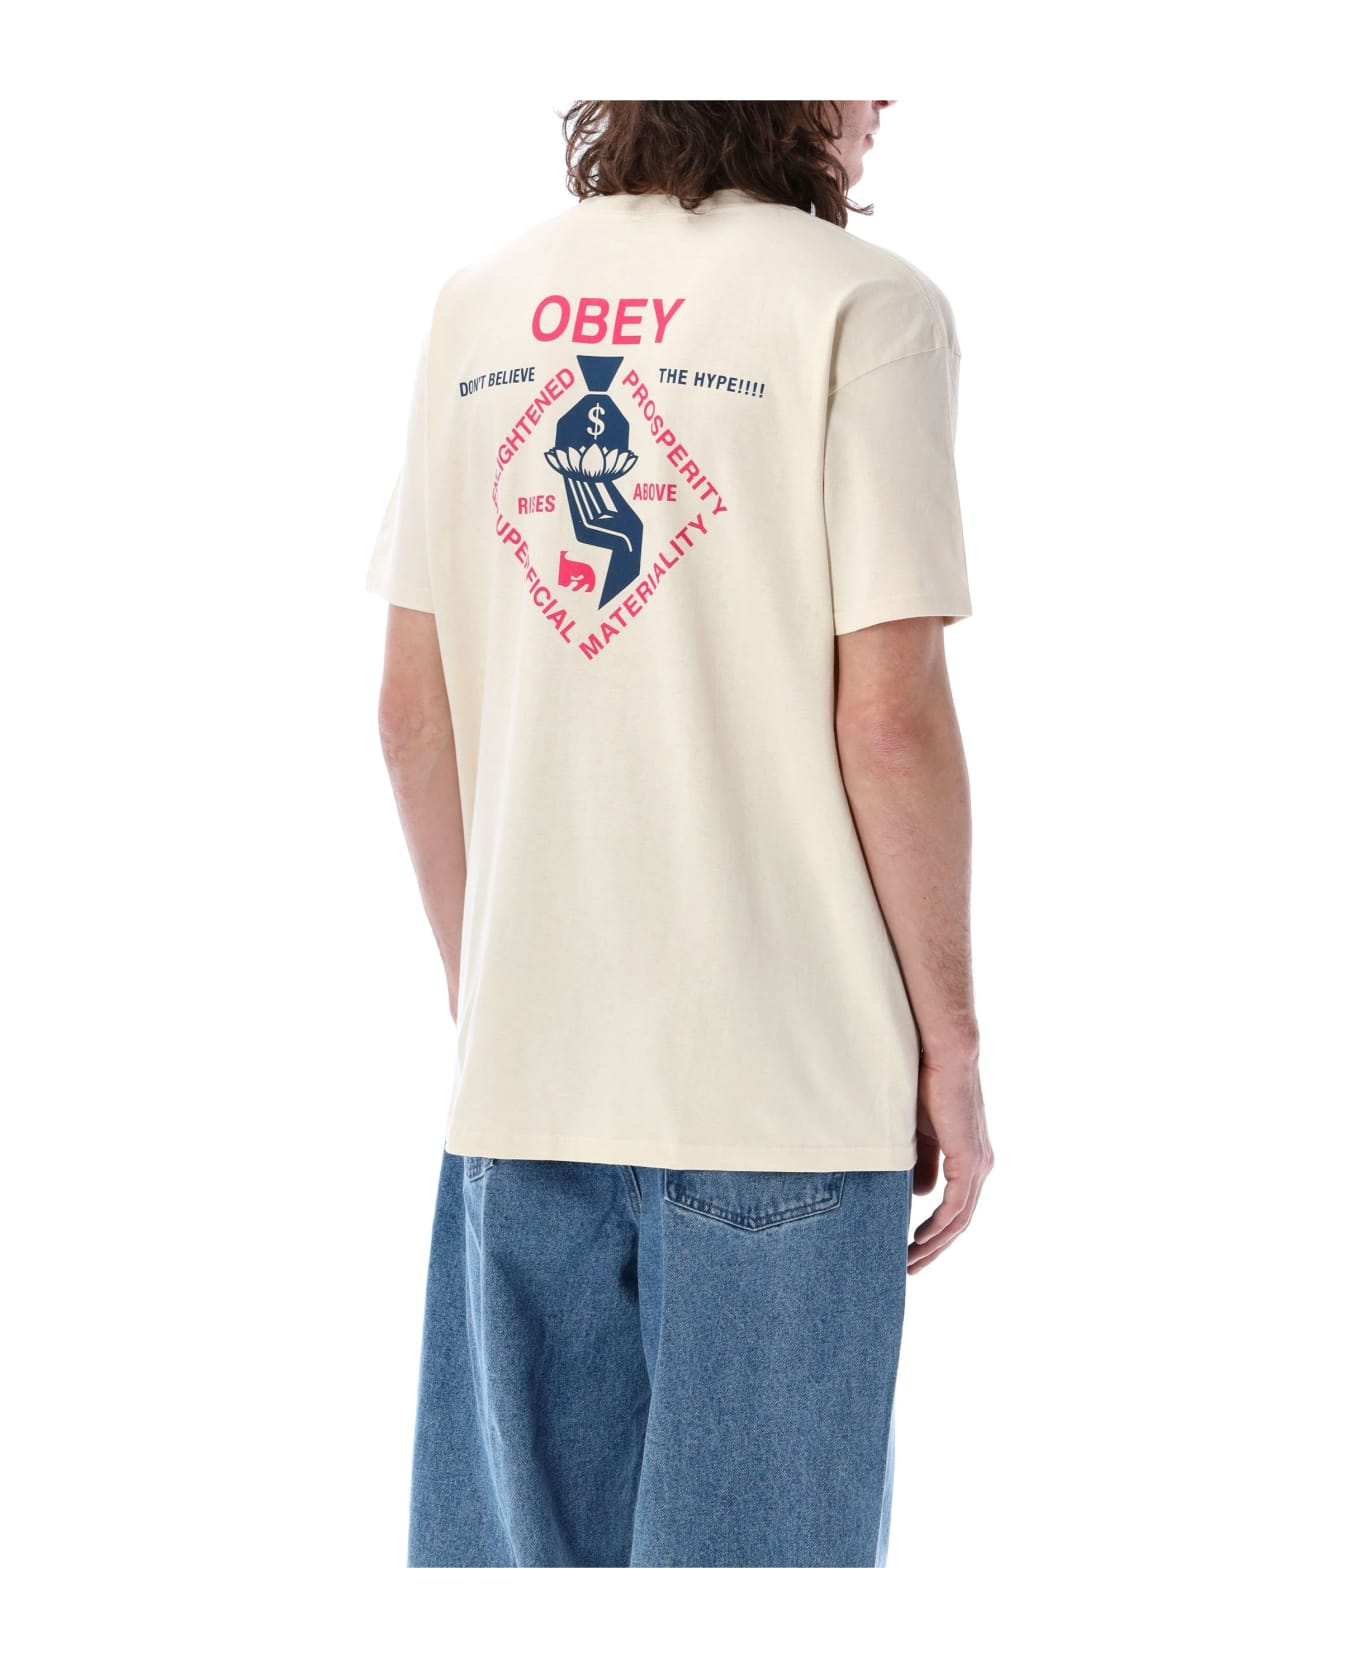 Obey Spiritually Rich T-shirt - CREAM